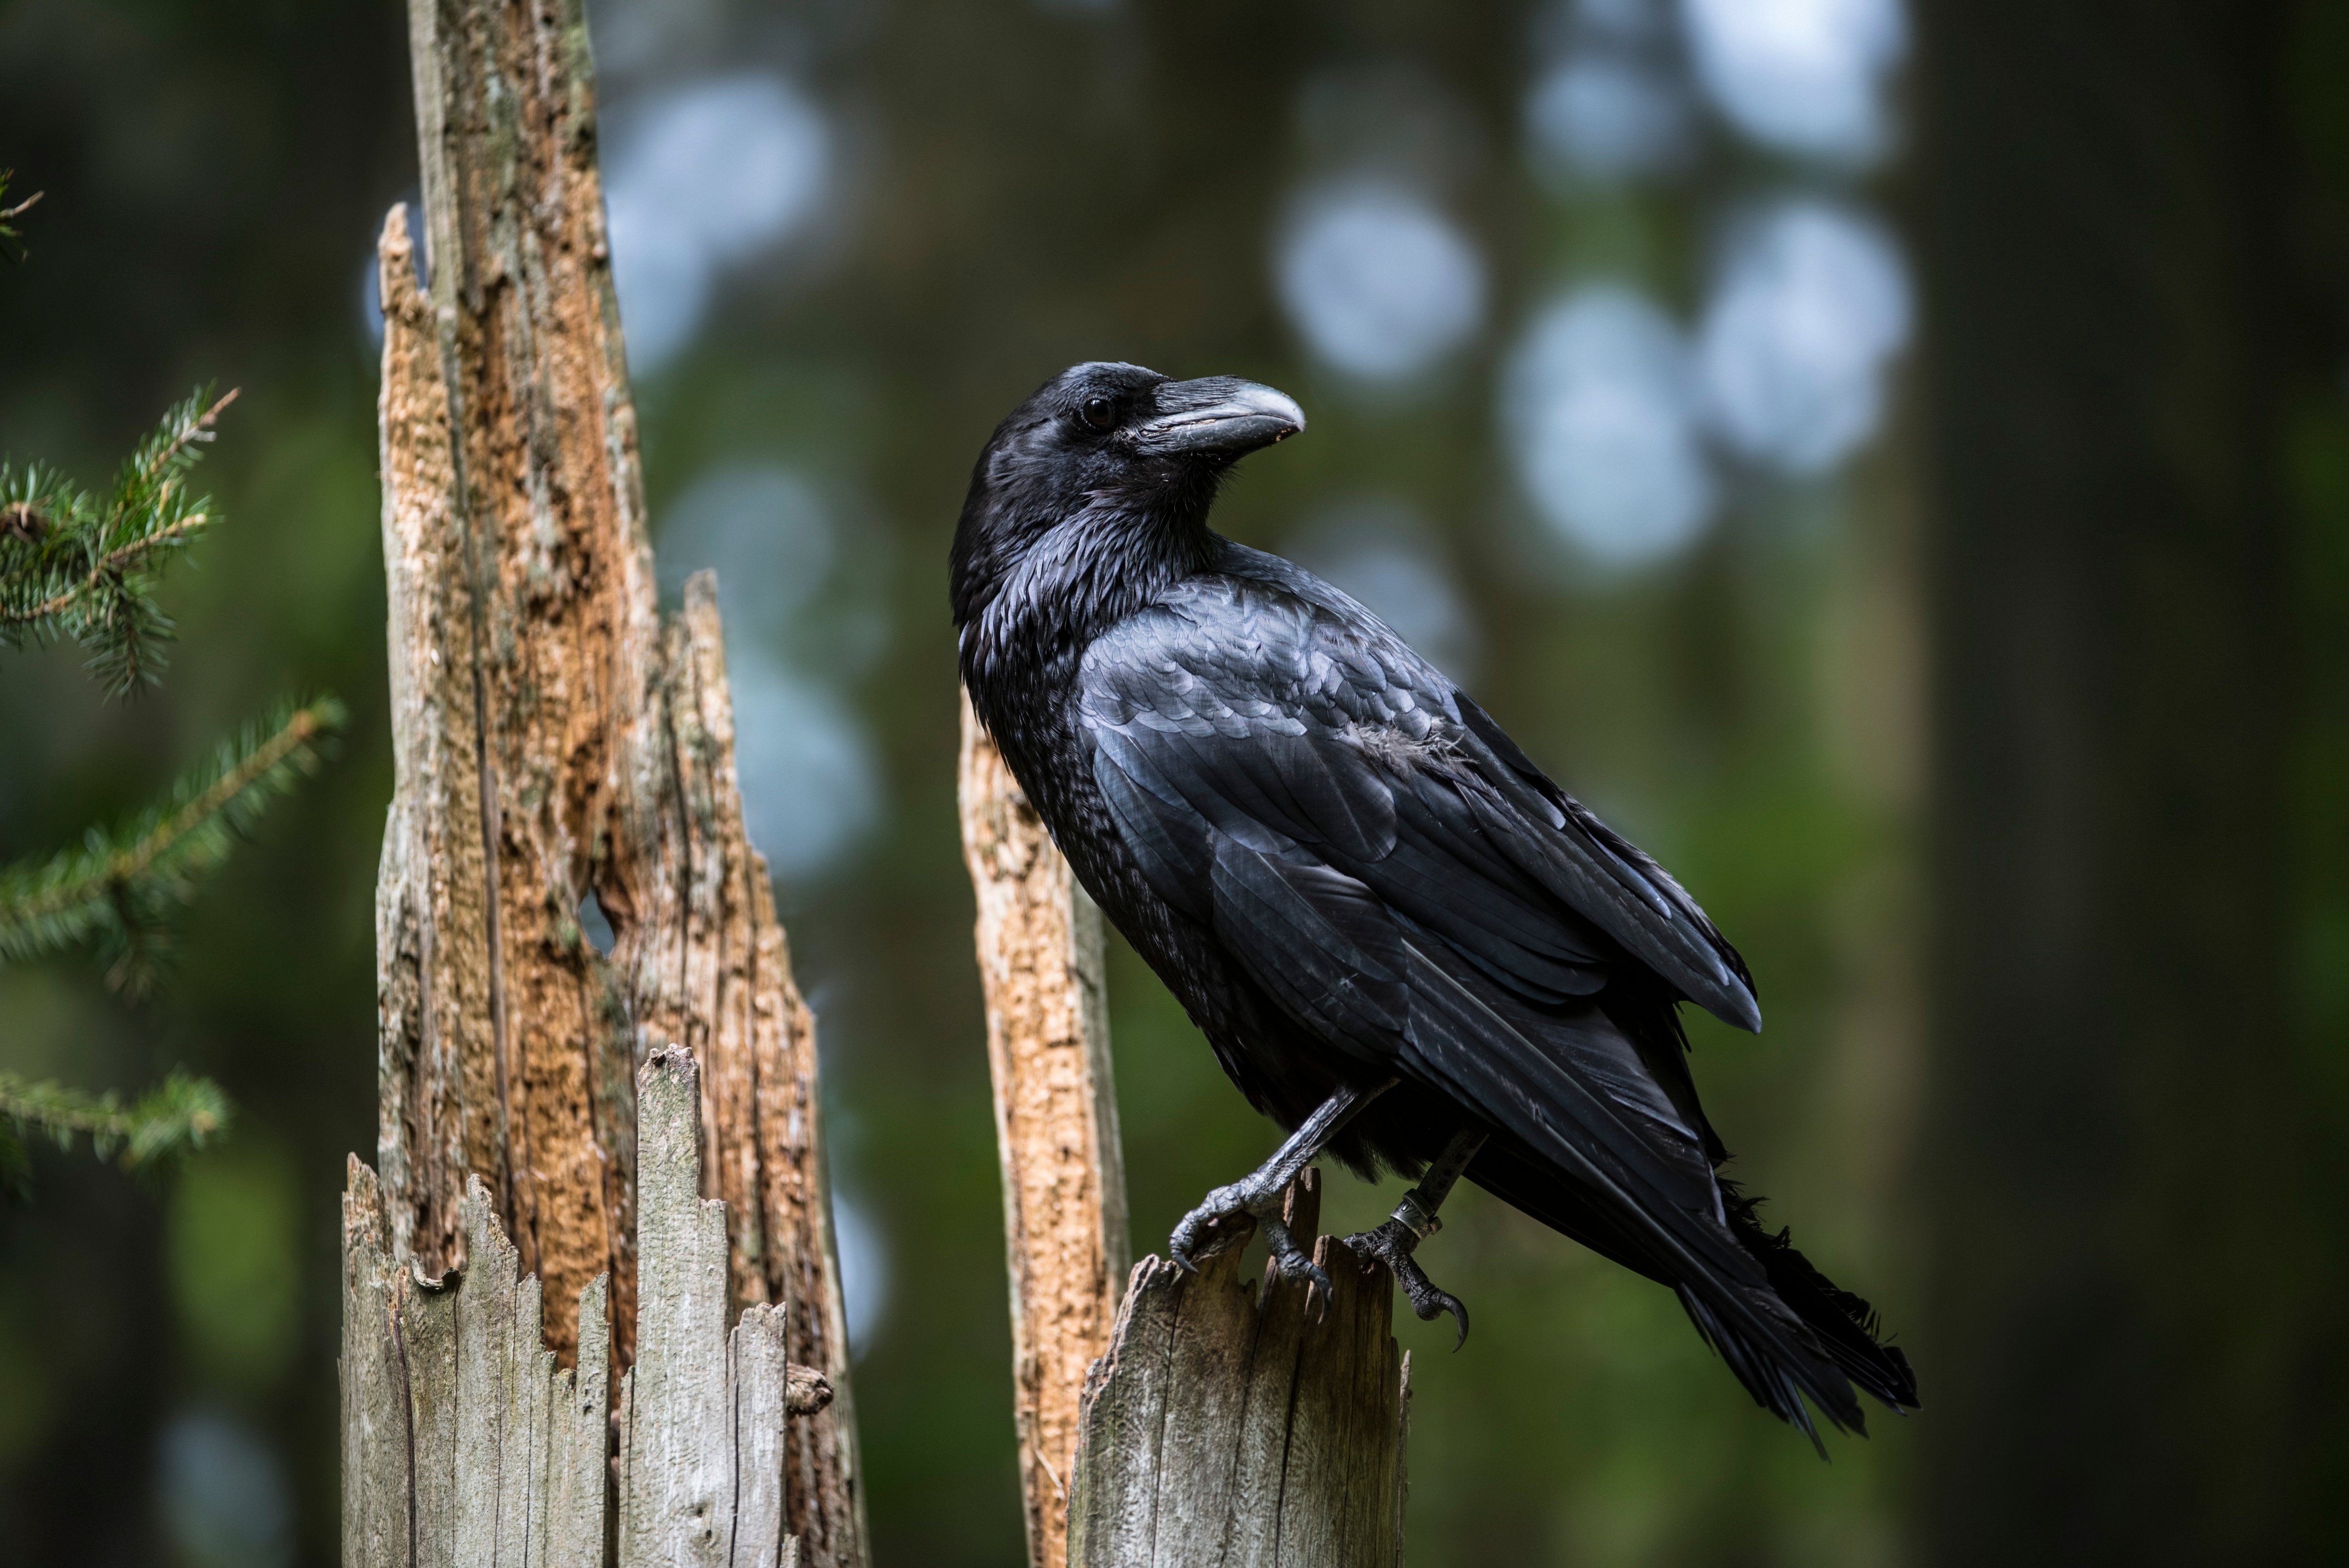 Making plans: The common raven has uncommon skills ((Arterra; UIG via Getty Images))